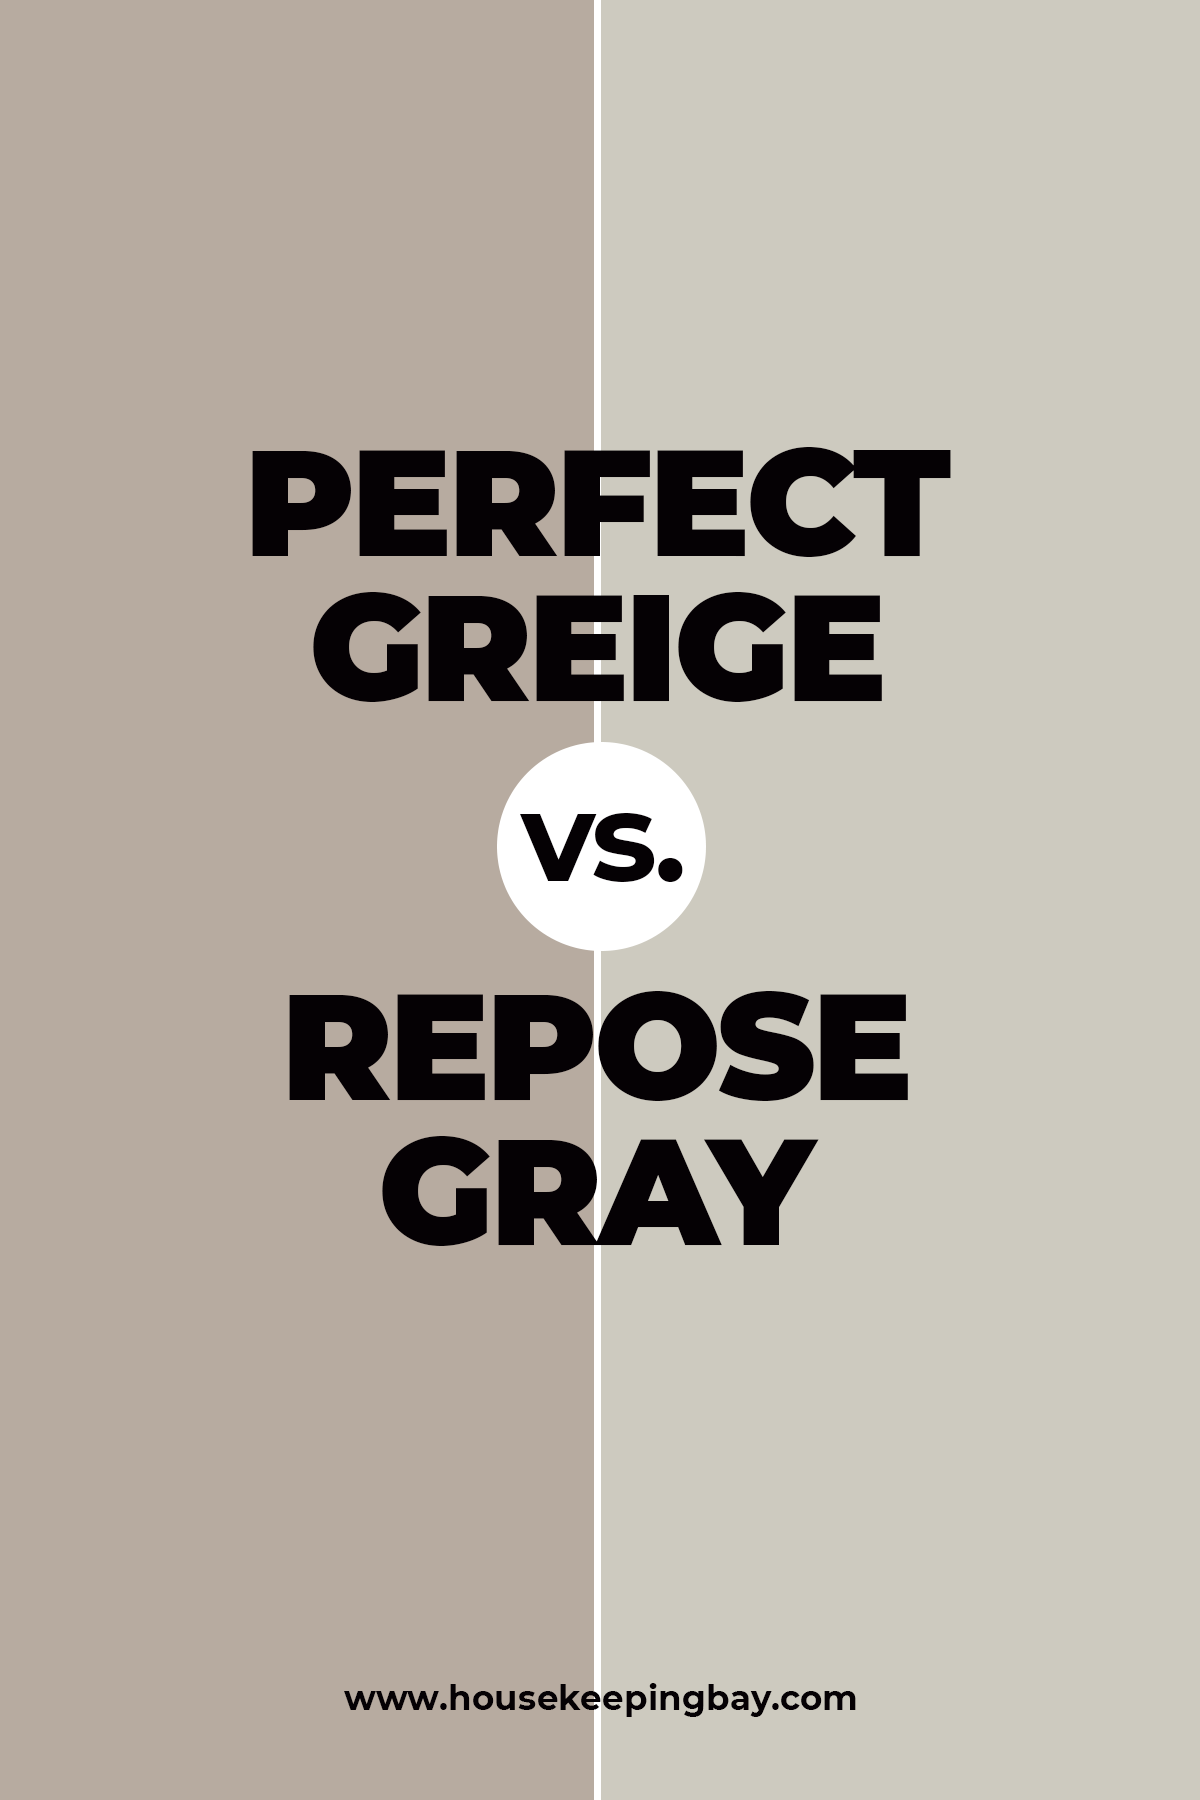 Perfect Greige vs. Repose Gray